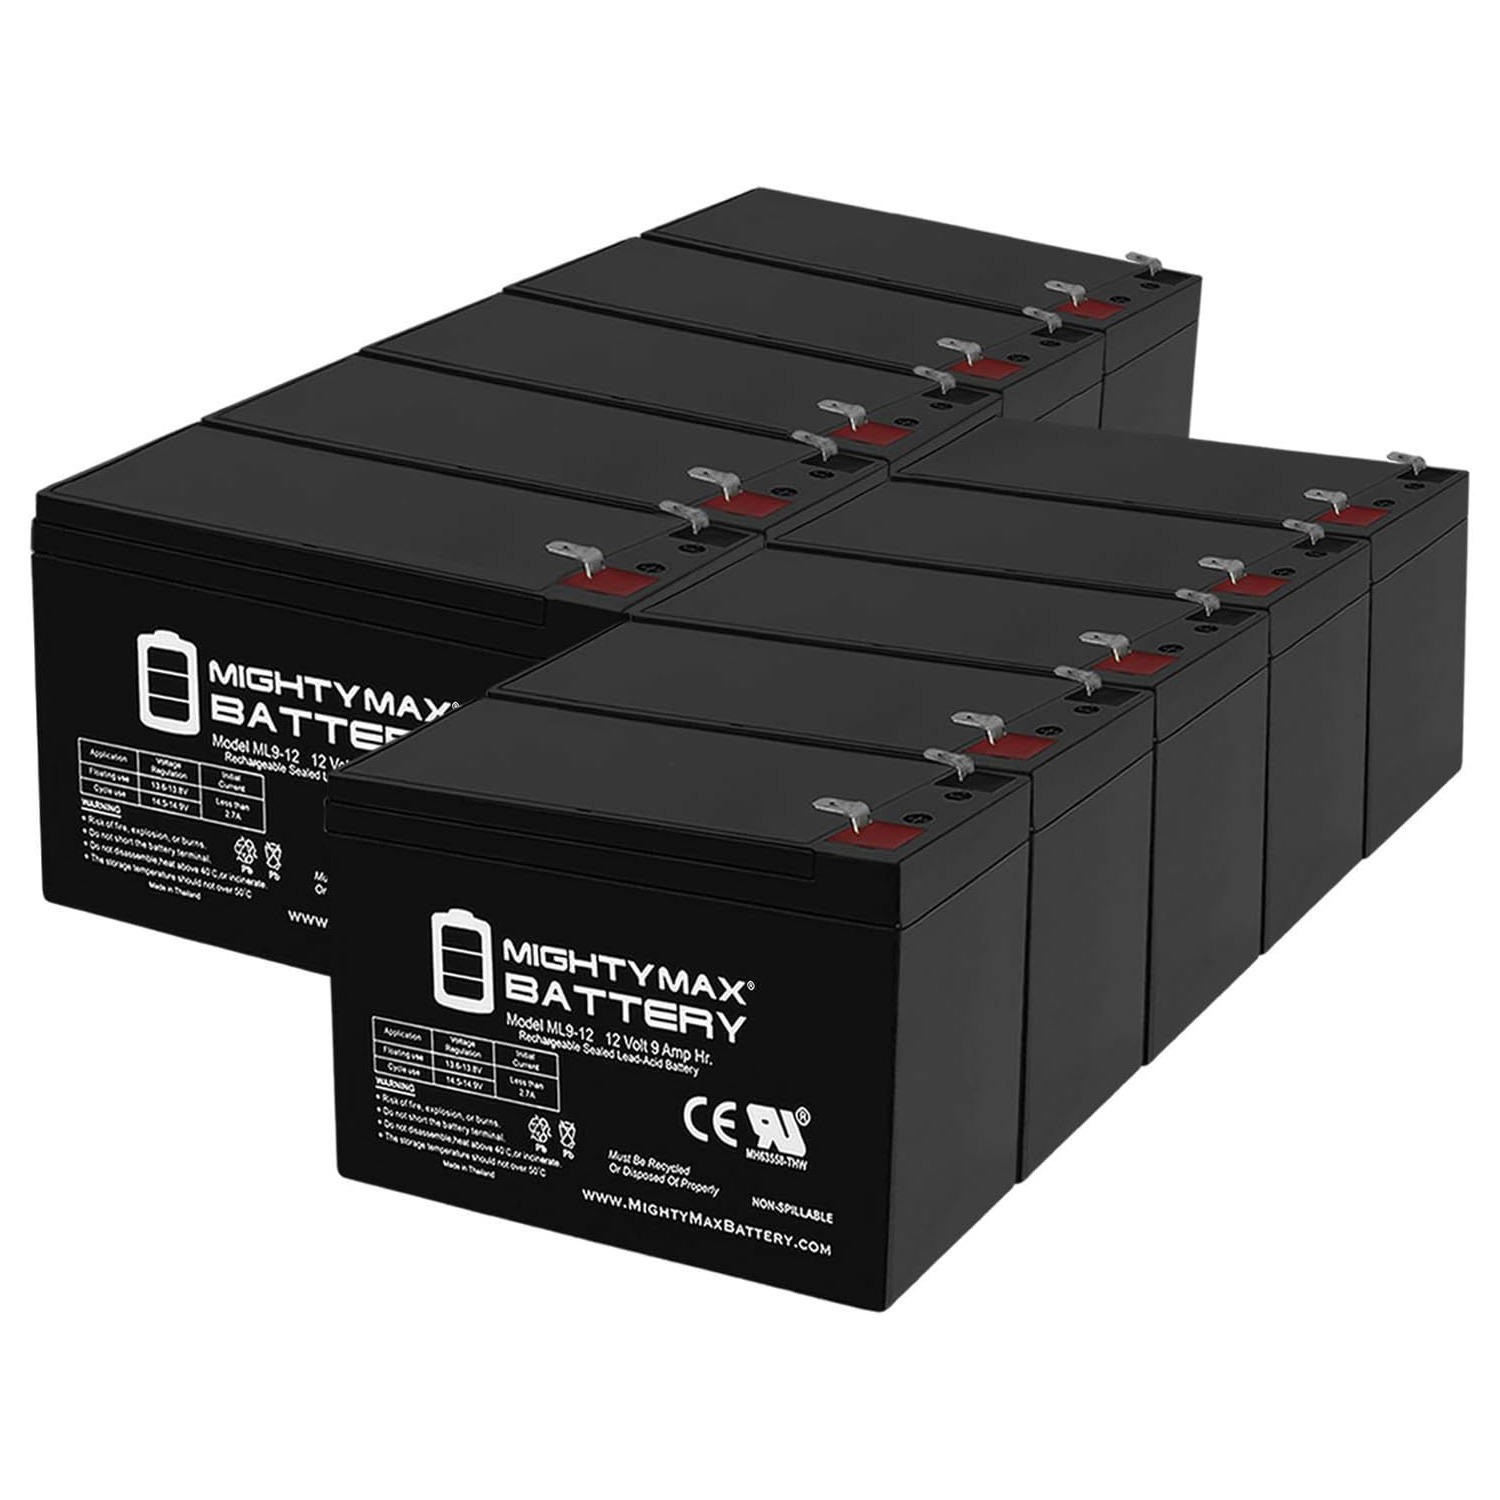 Altronix SMP7PMP4 12V, 9Ah Lead Acid Battery - 10 Pack